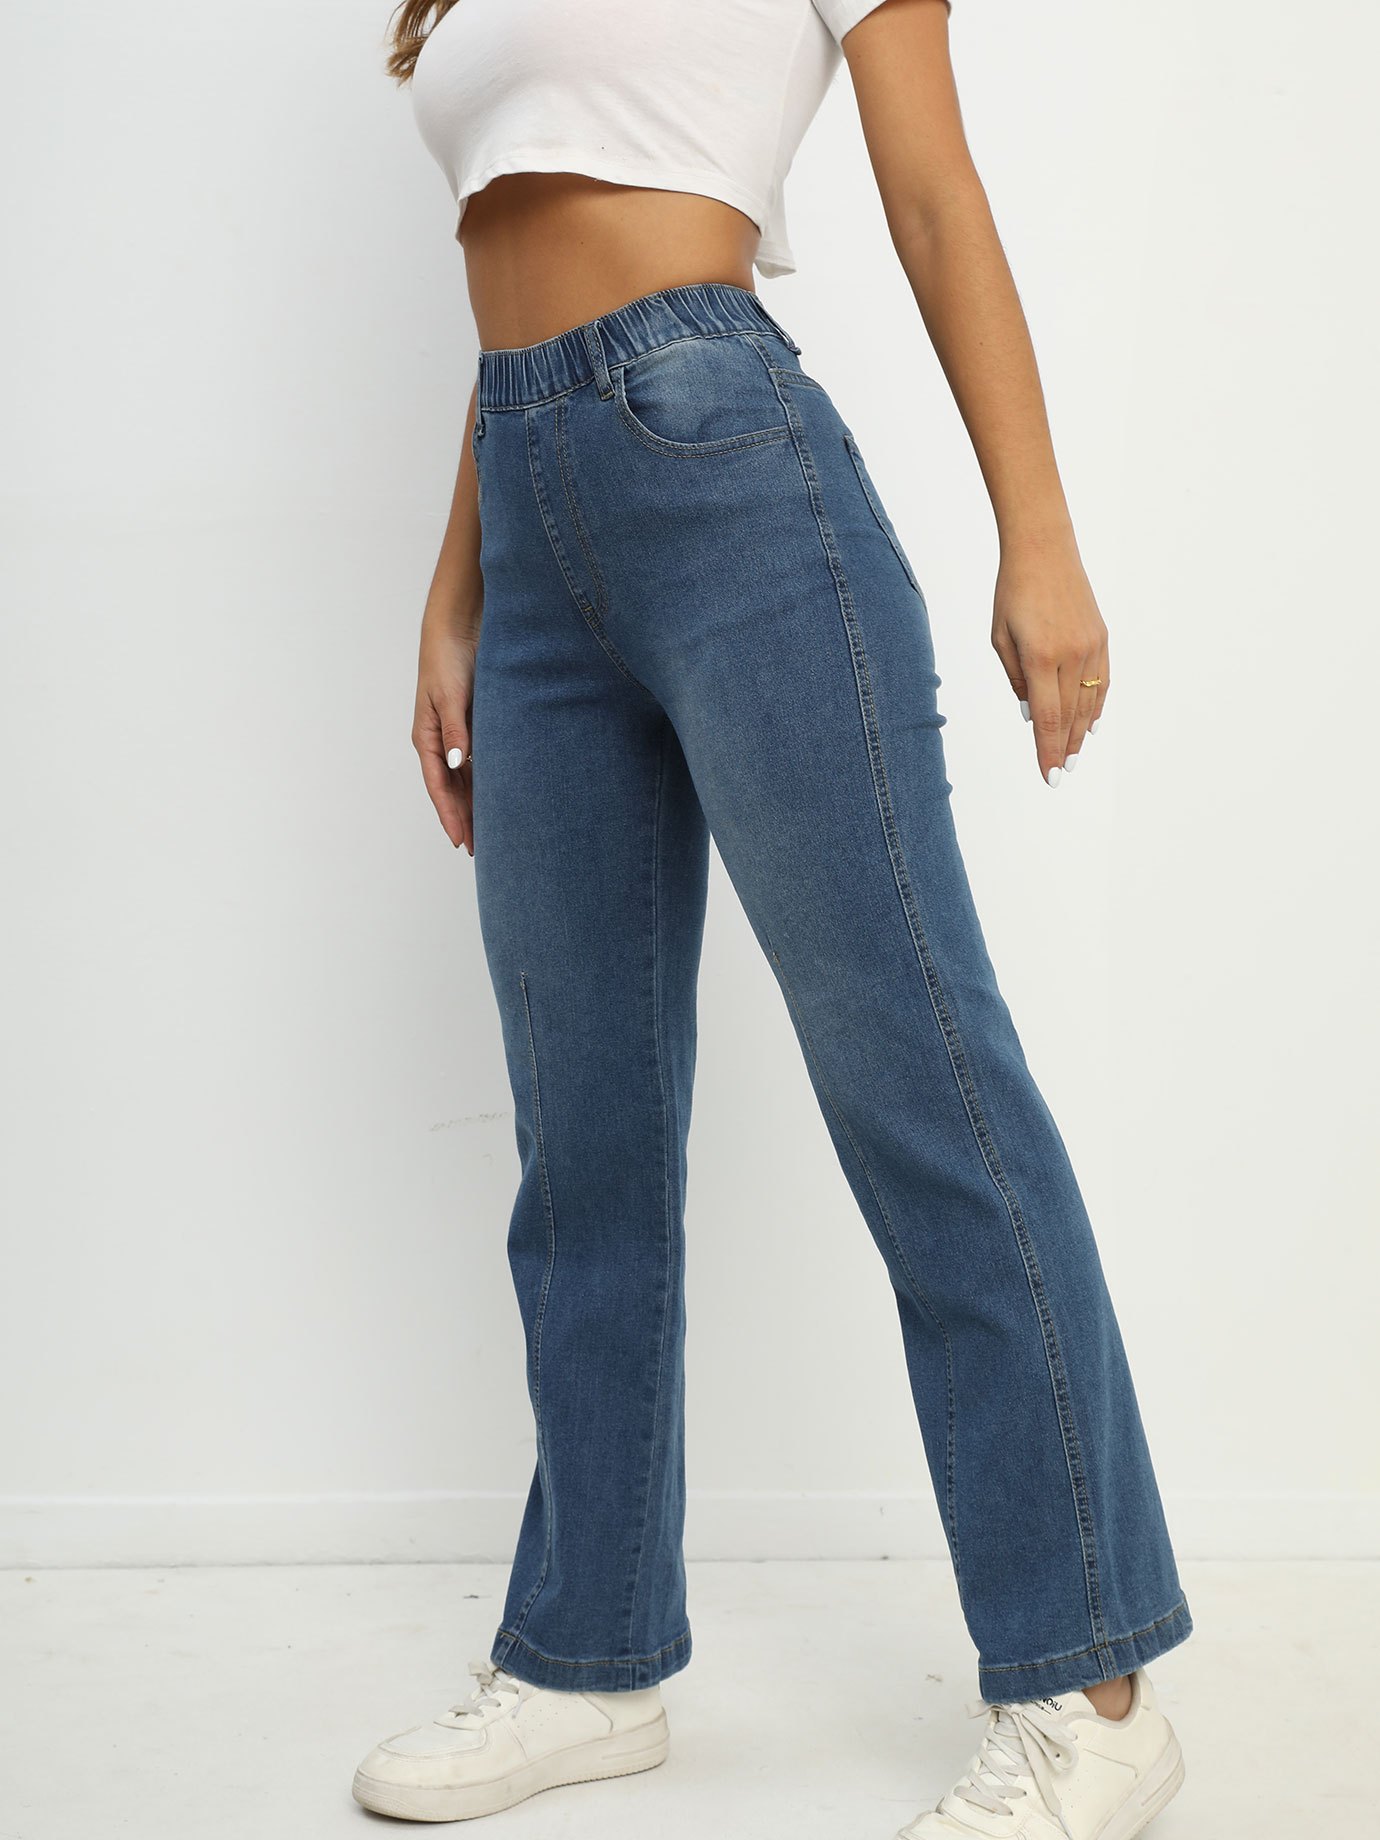 elastic waist stretchy straight jeans loose fit slant pockets washed denim pants womens denim jeans clothing